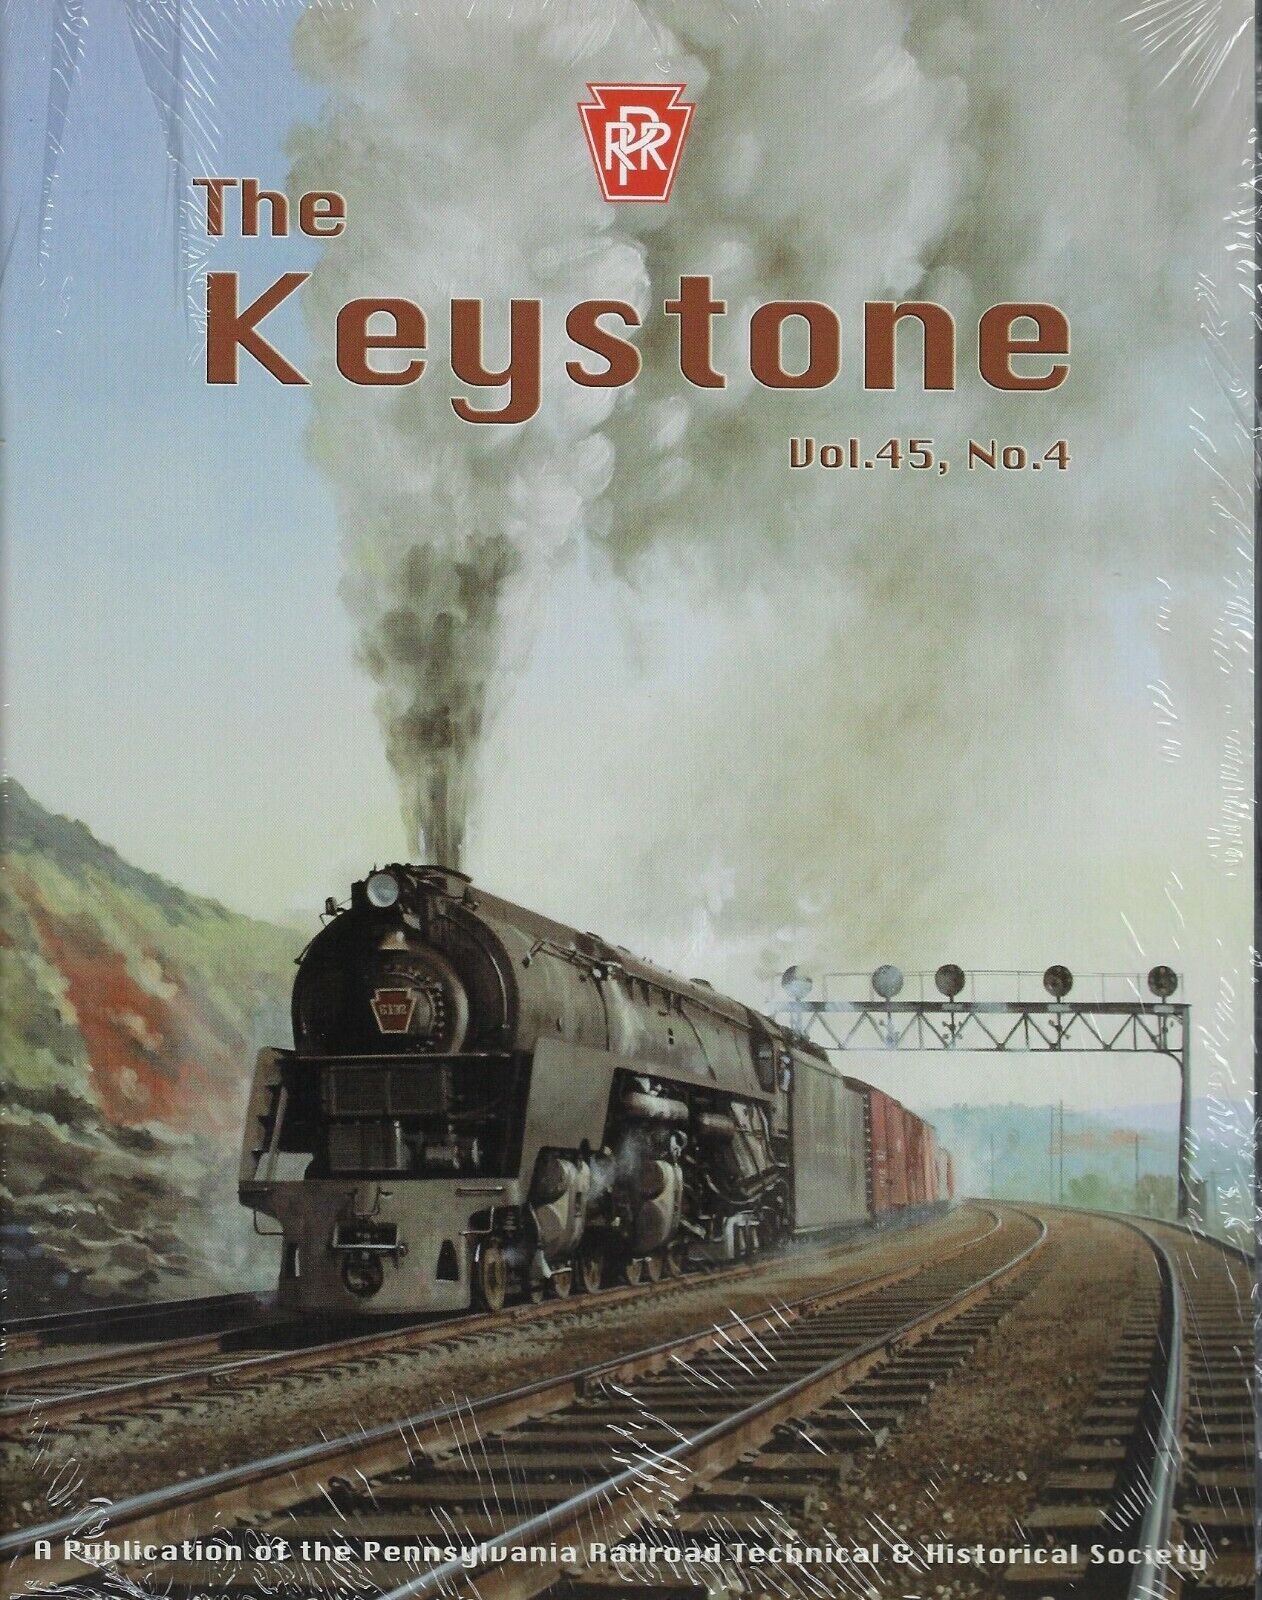 The Keystone, PRR Publication, Winter 2012, Vol. 45, No. 4 - (LAST BRAND NEW)